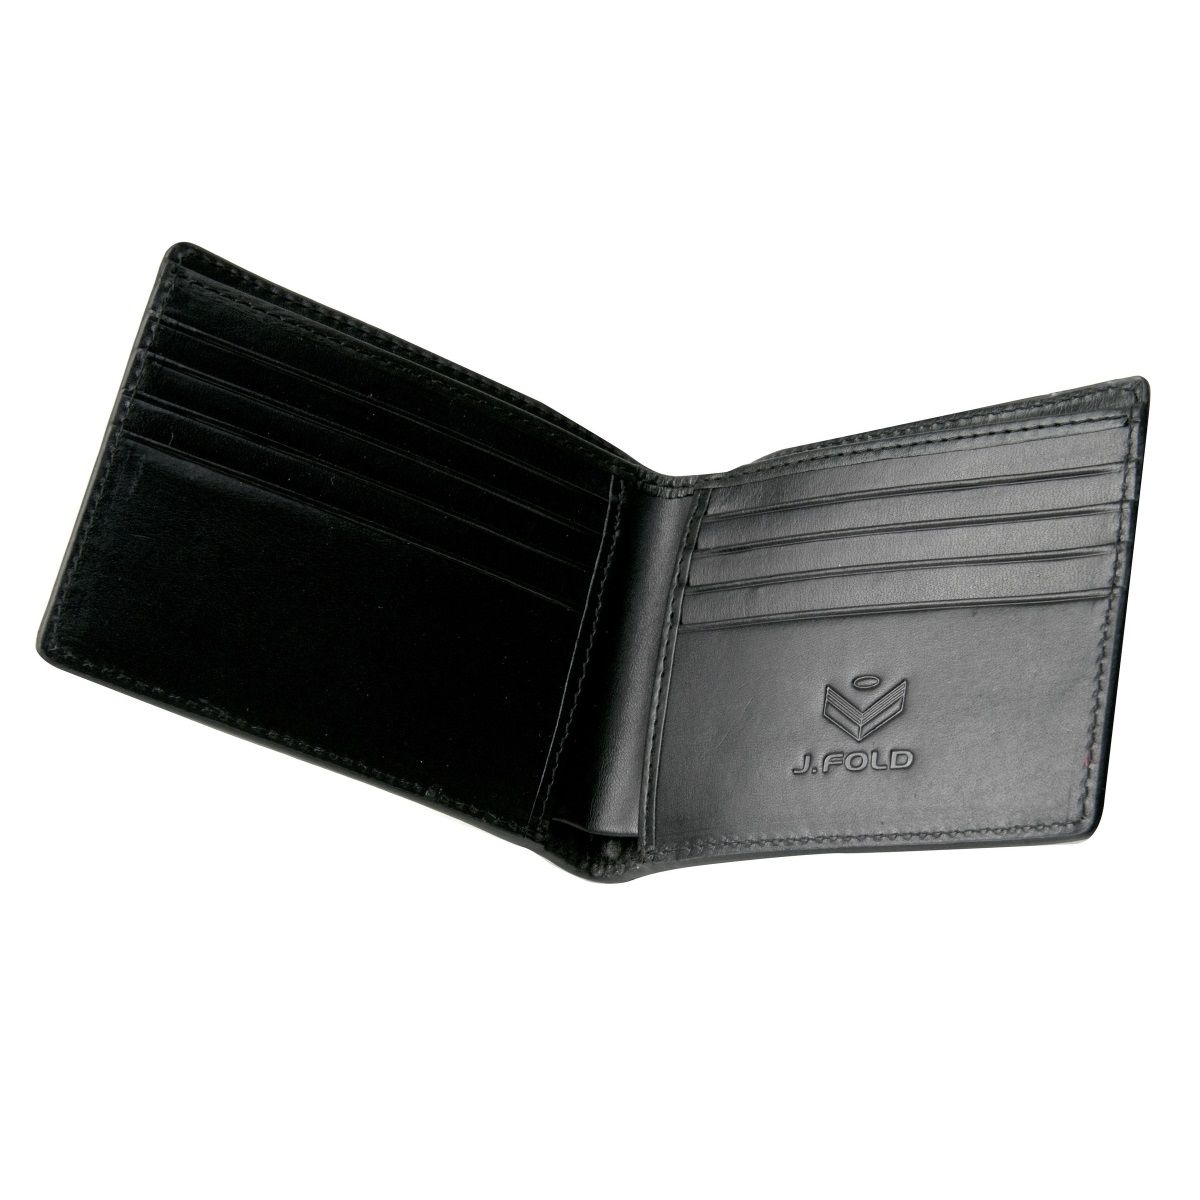 J.FOLD Tetra Leather Wallet - Black